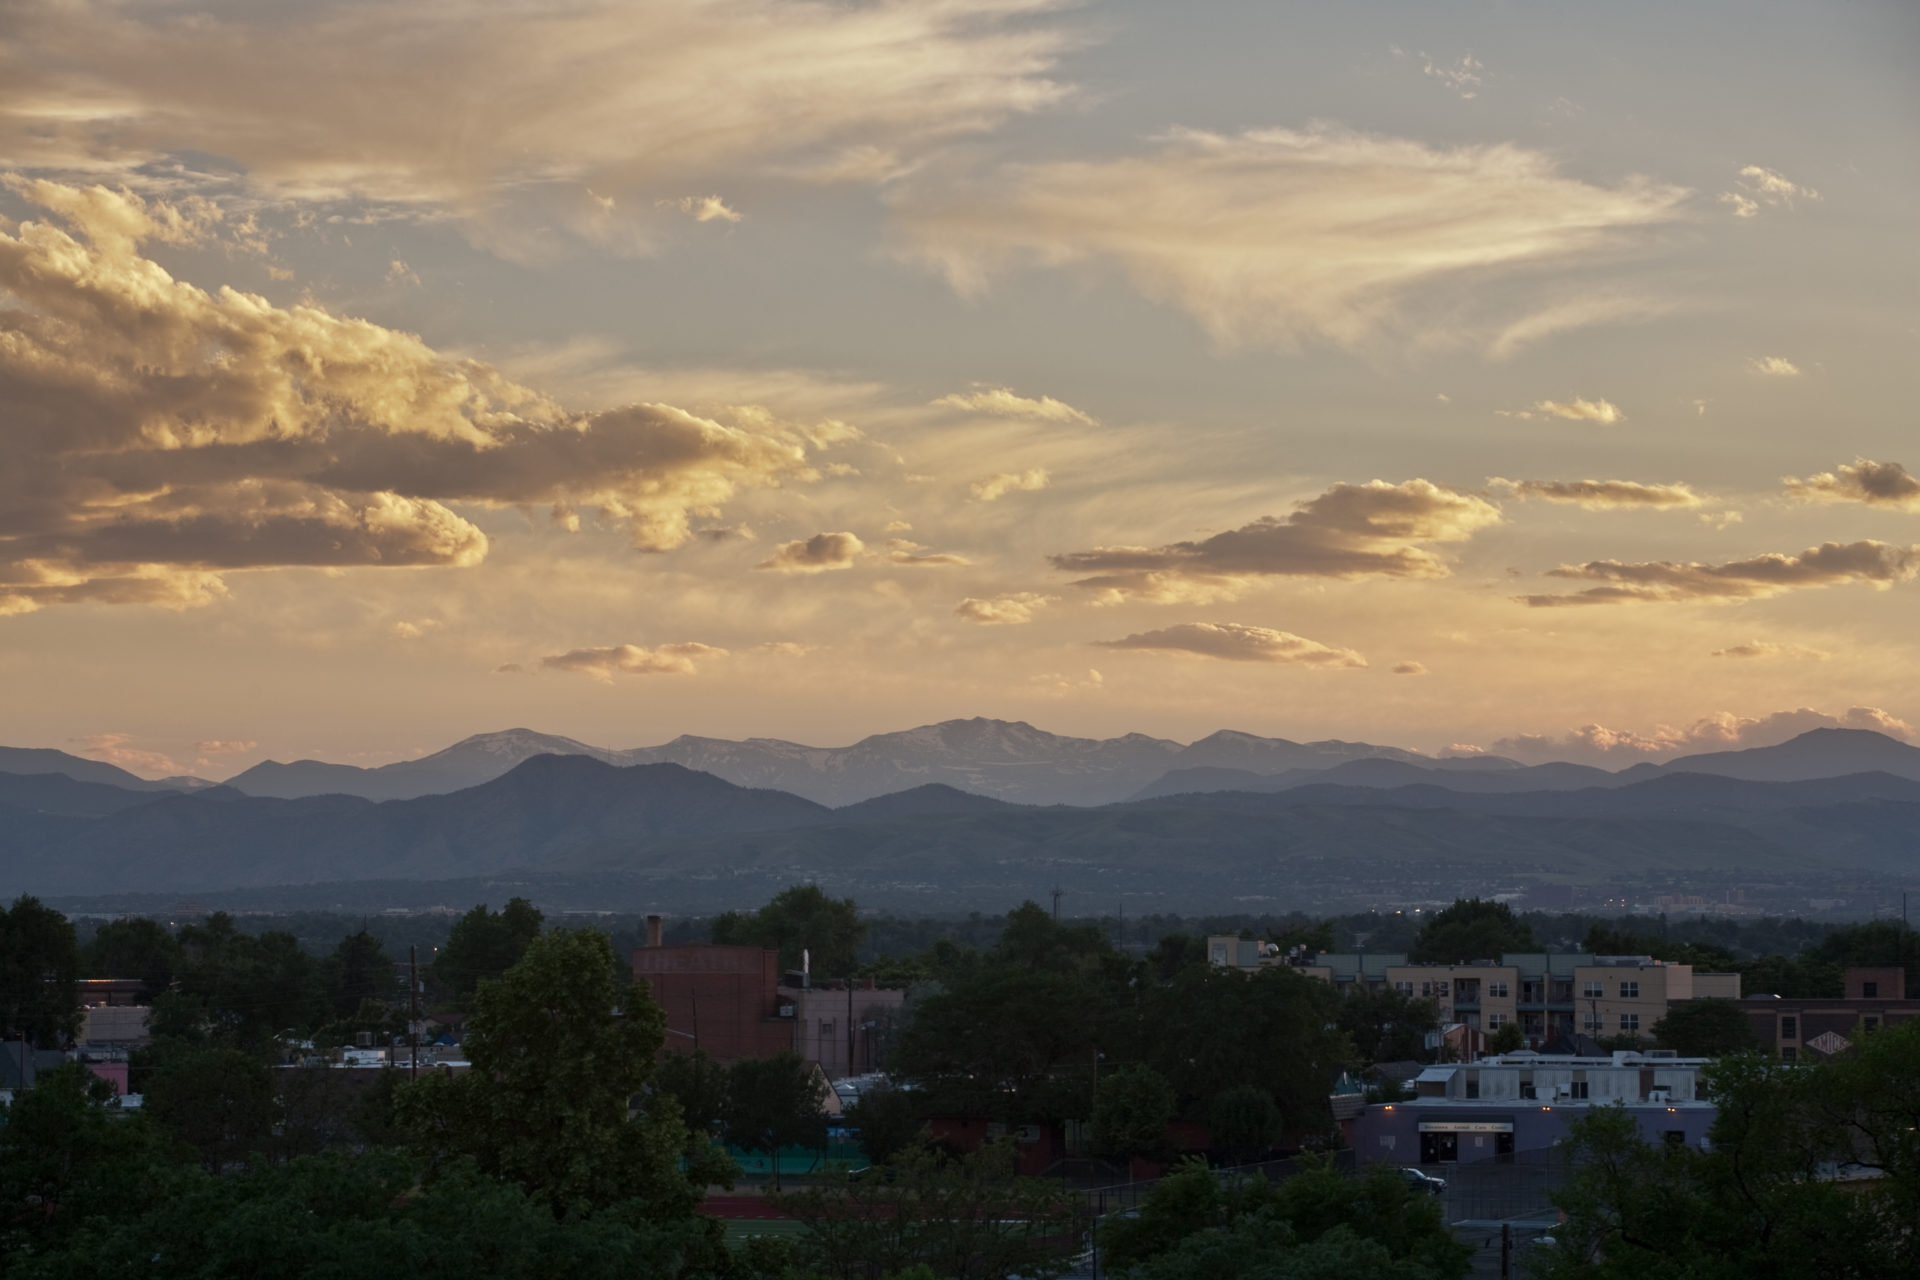 Mount Evans sunset - June 23, 2011